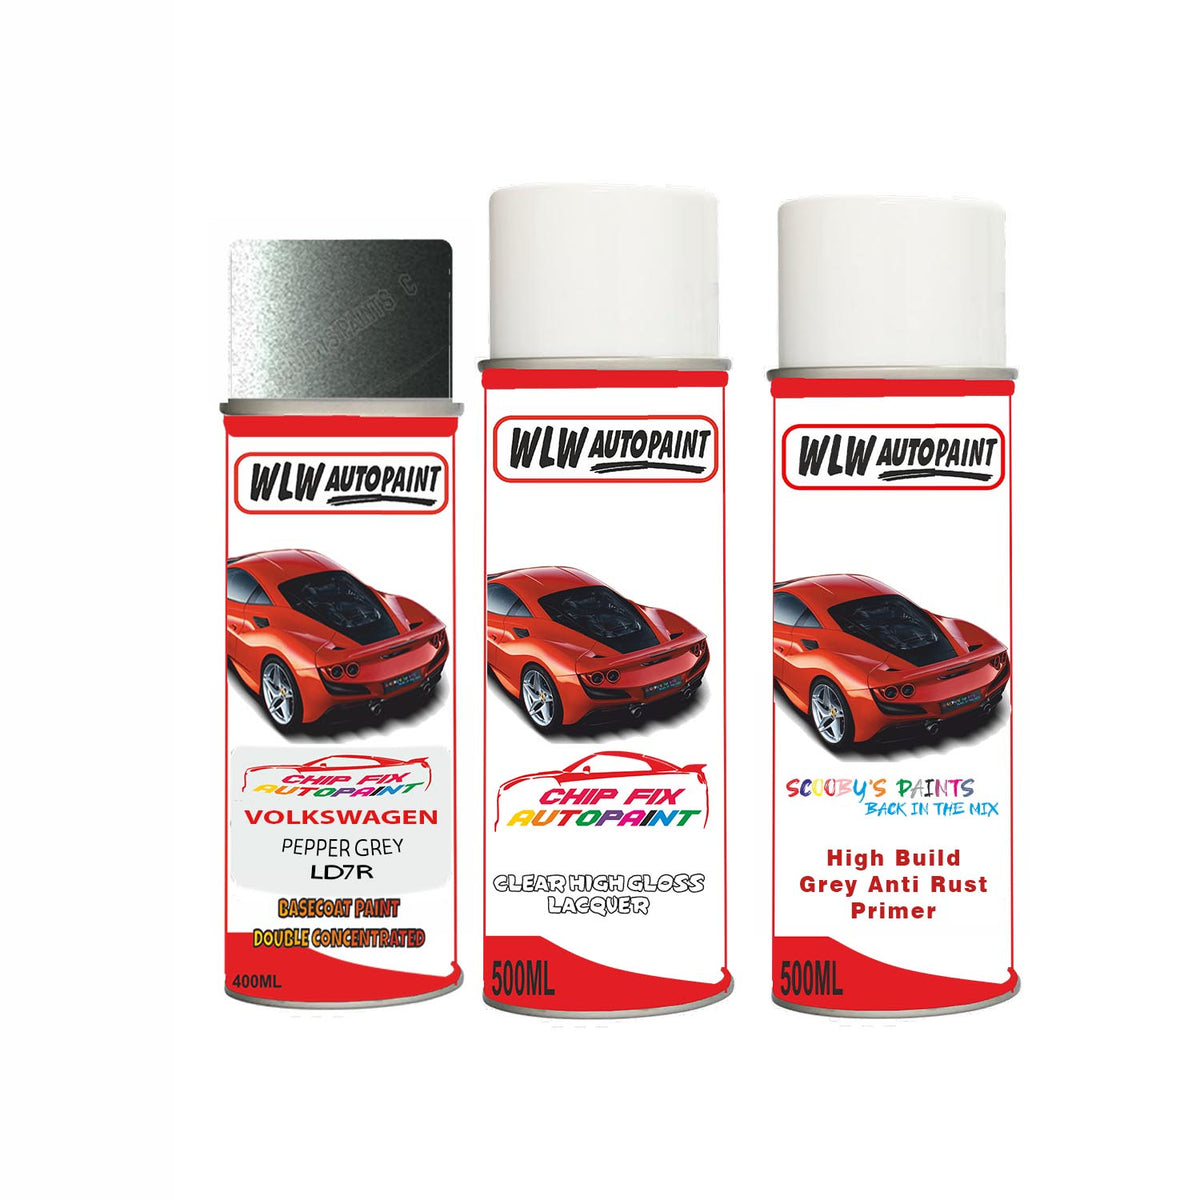 Volkswagen PEPPER GREY Code LD7R Aerosol Spray Paint Scratch/Repair